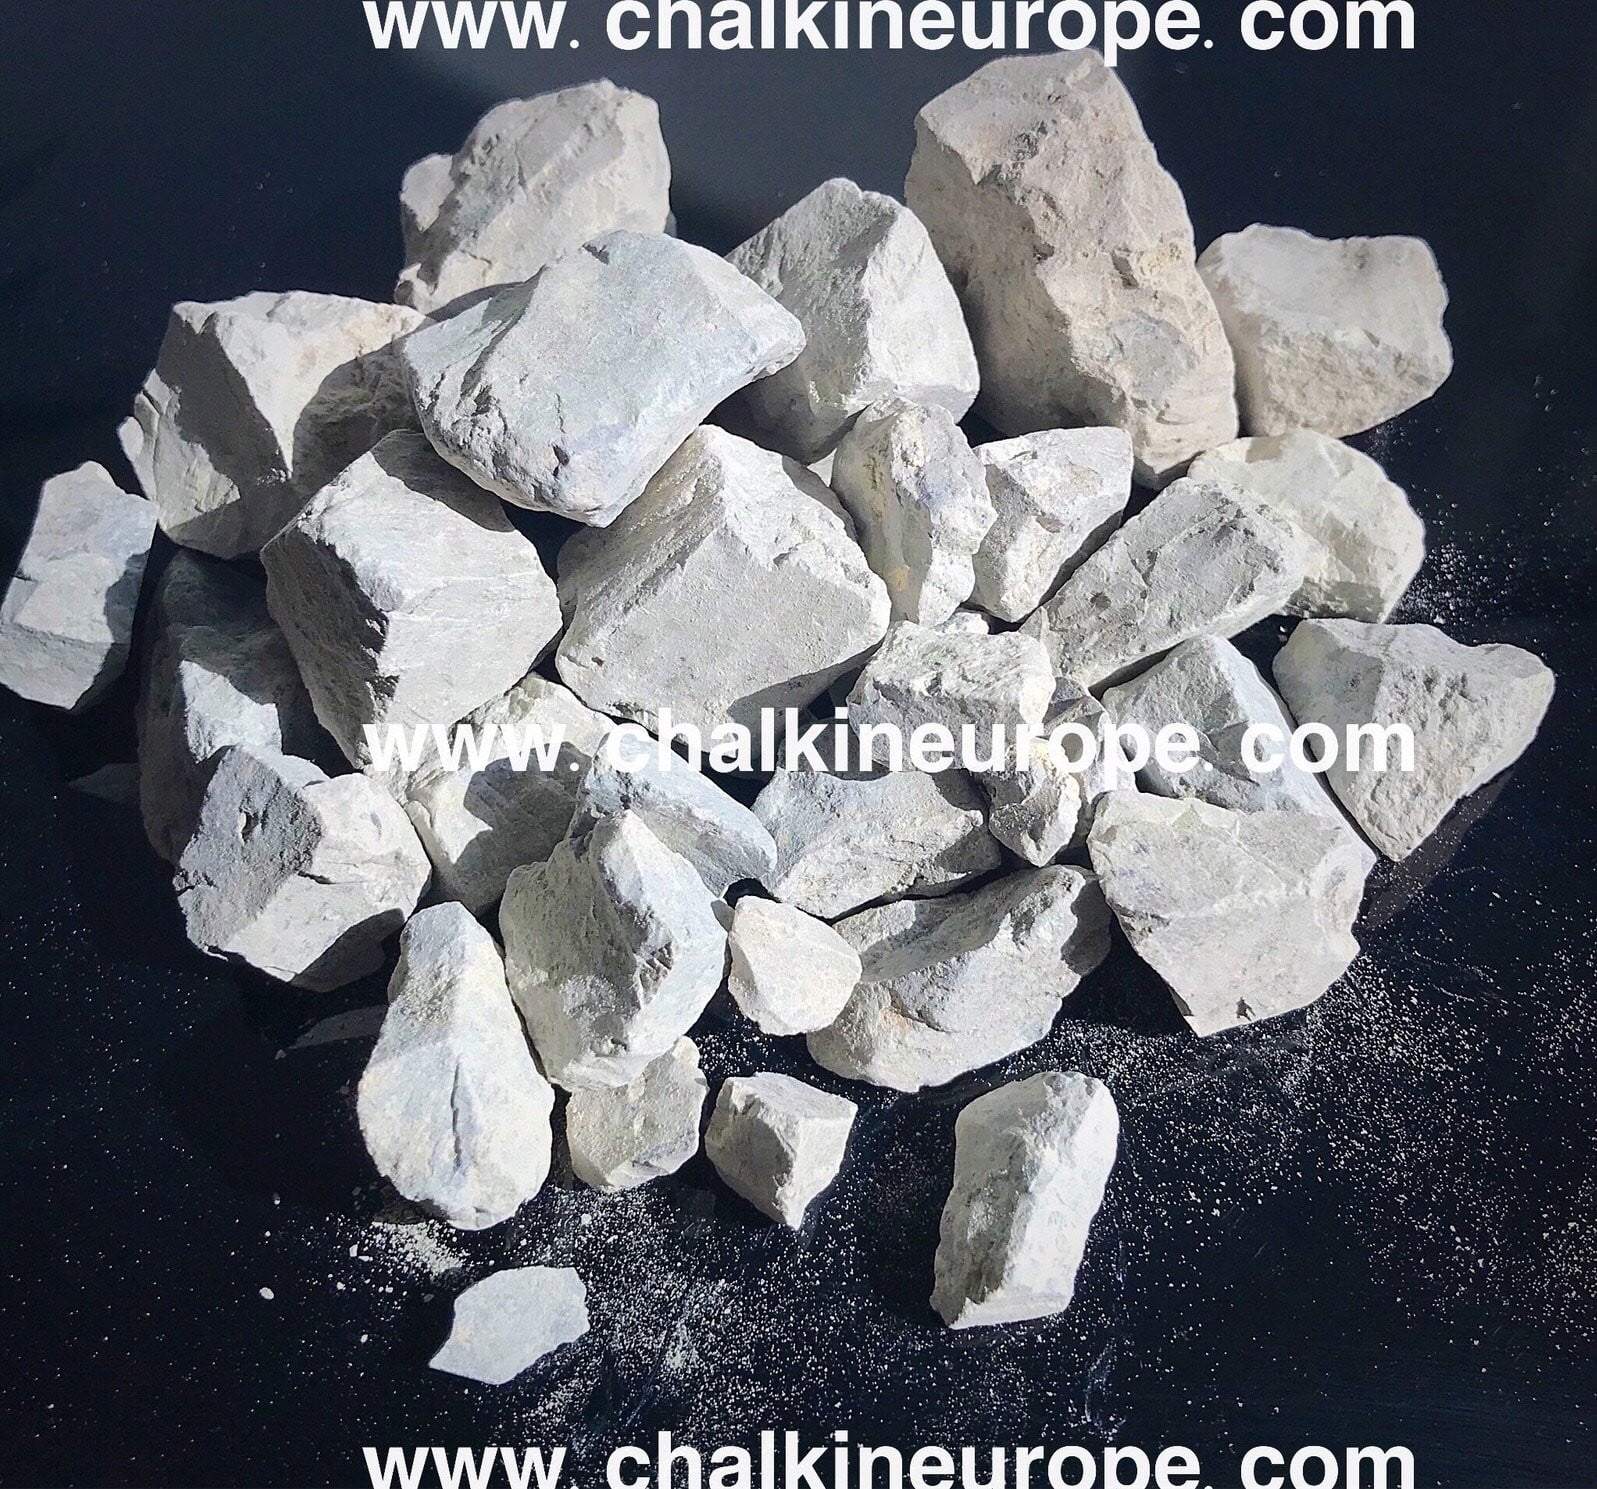 Argila asiática cinza / cinza - Chalkineurope